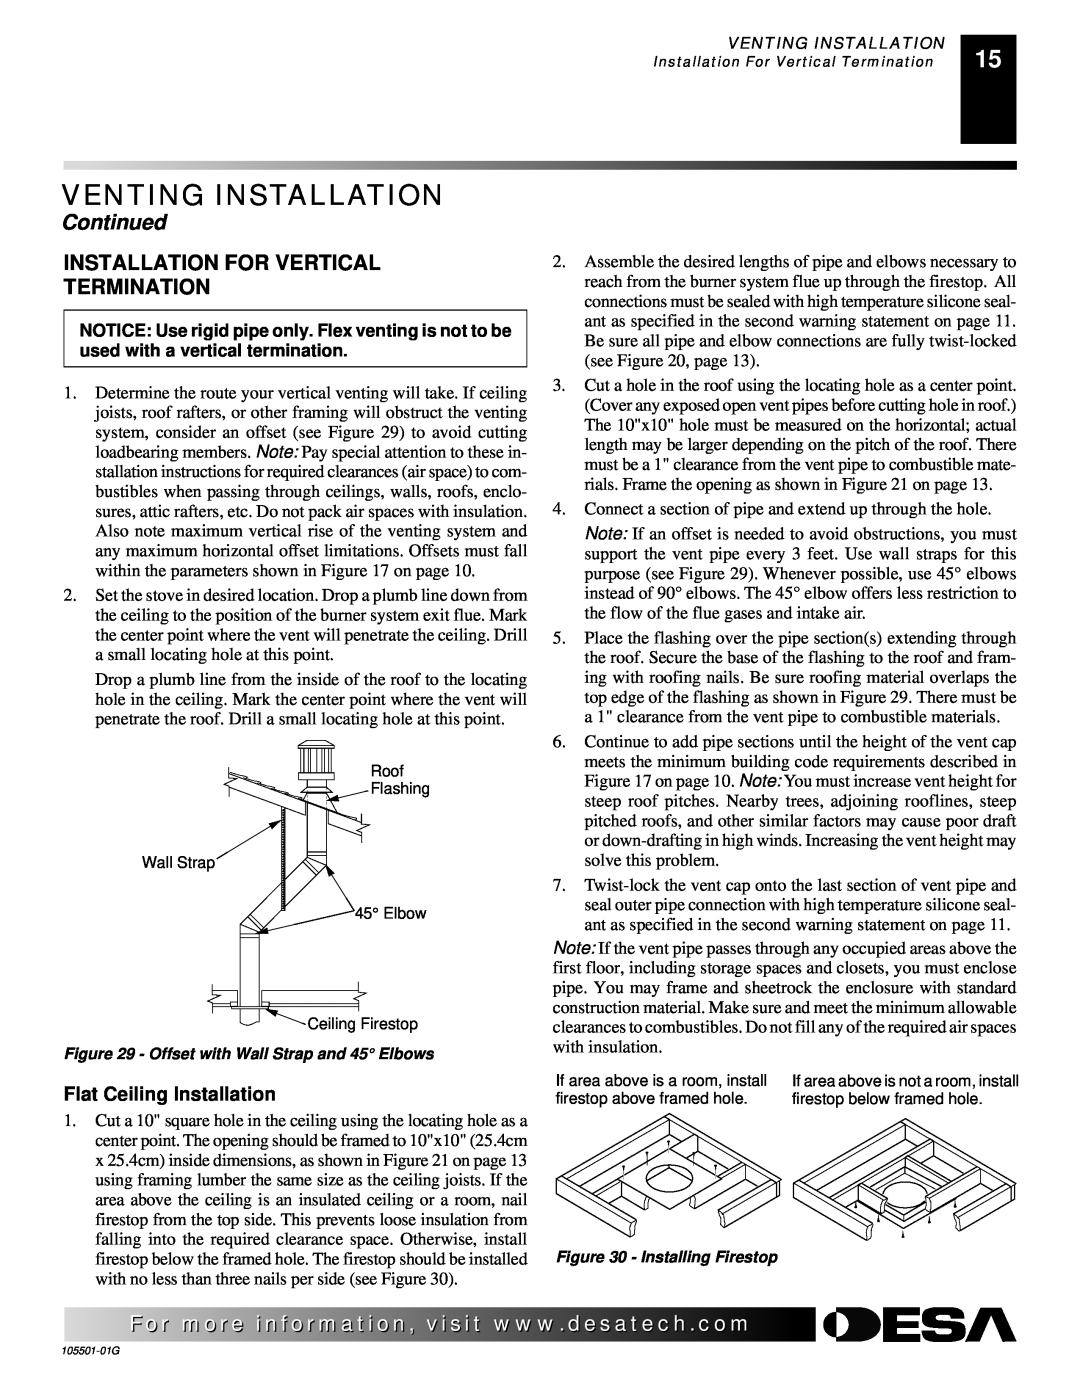 Desa Tech CDVBPC, CDVBNC manual Continued, Installation For Vertical Termination, Flat Ceiling Installation 